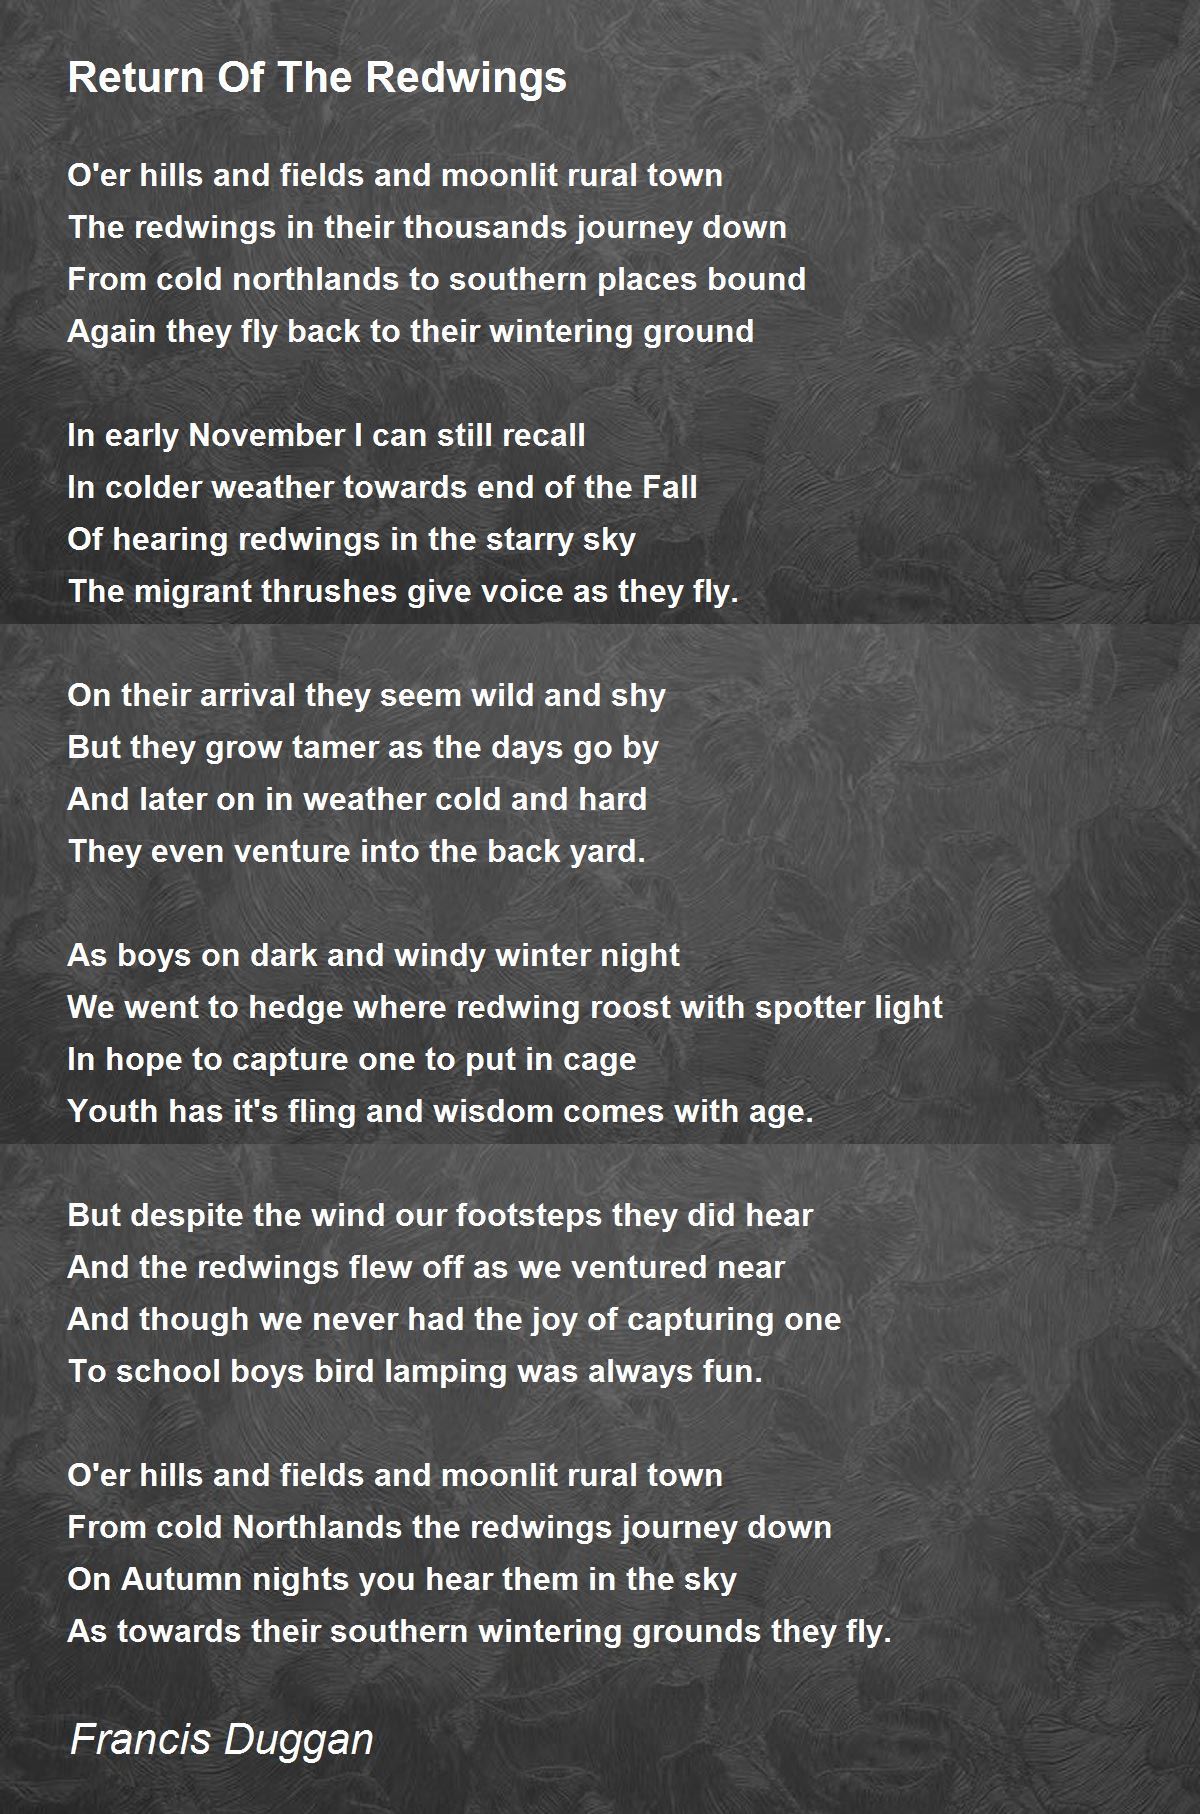 Return Of The Redwings - Return Of The Redwings Poem by Francis Duggan